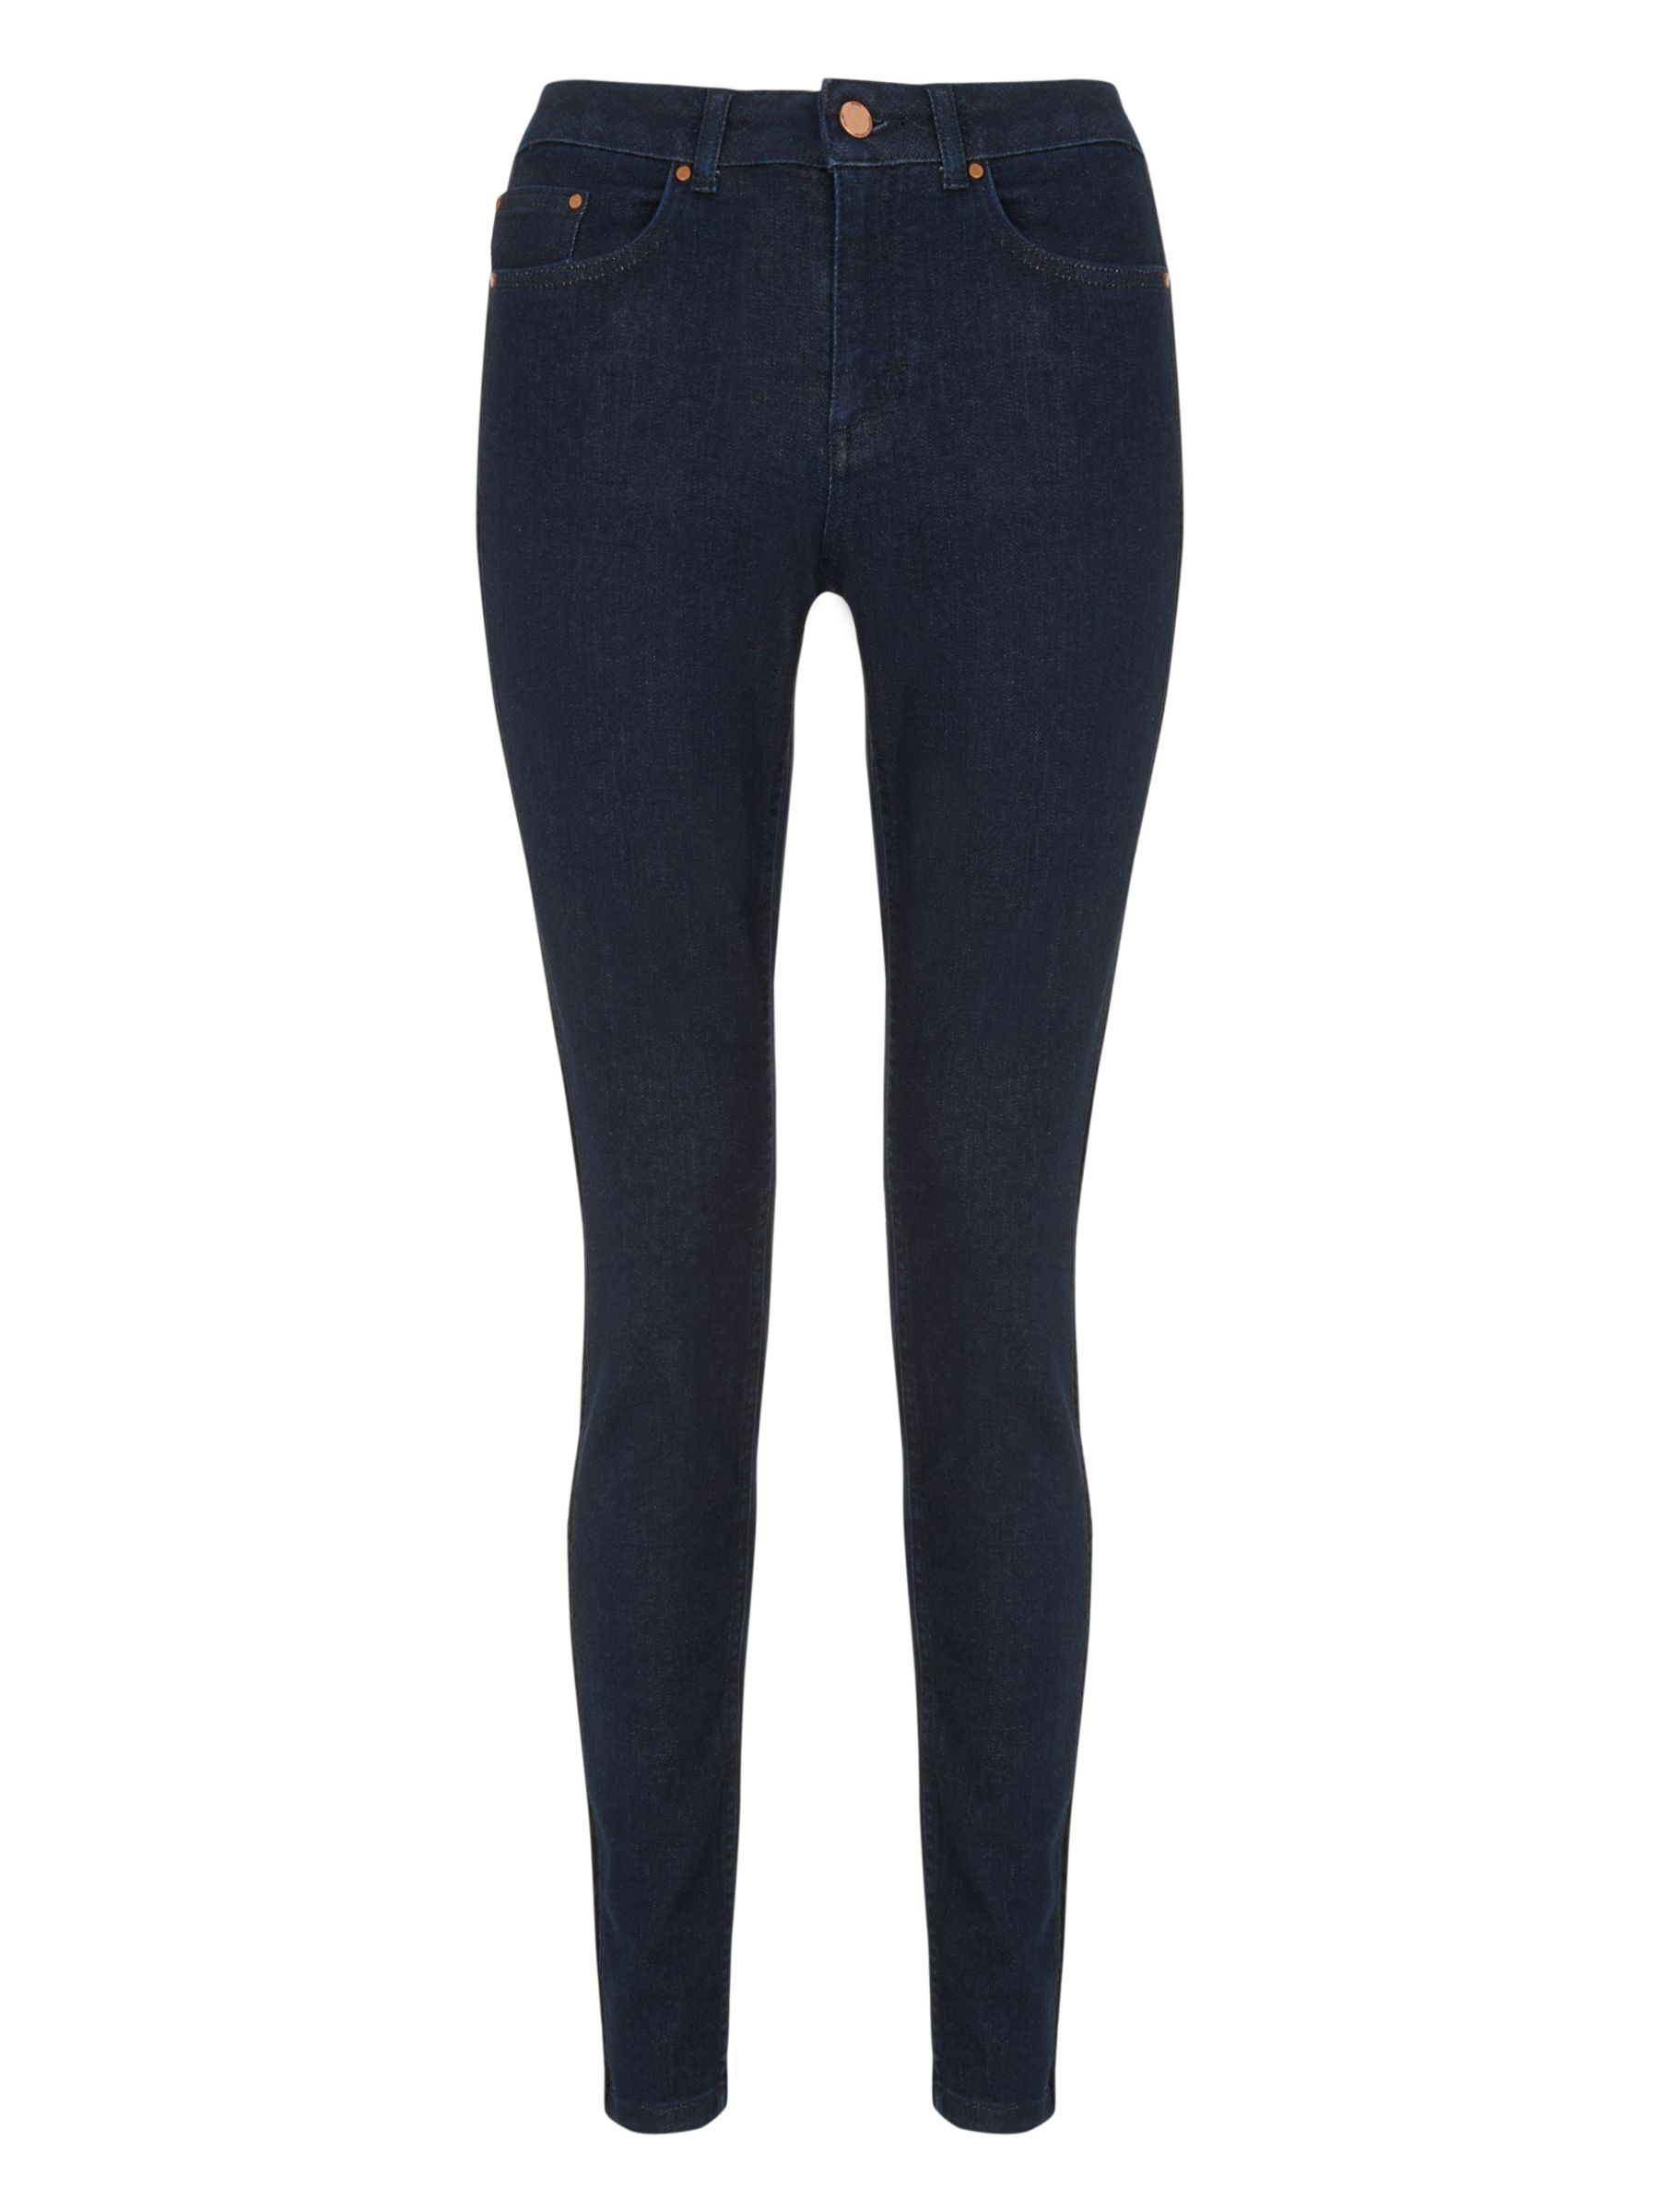 Boden Soho Skinny Jeans, Indigo at John Lewis & Partners